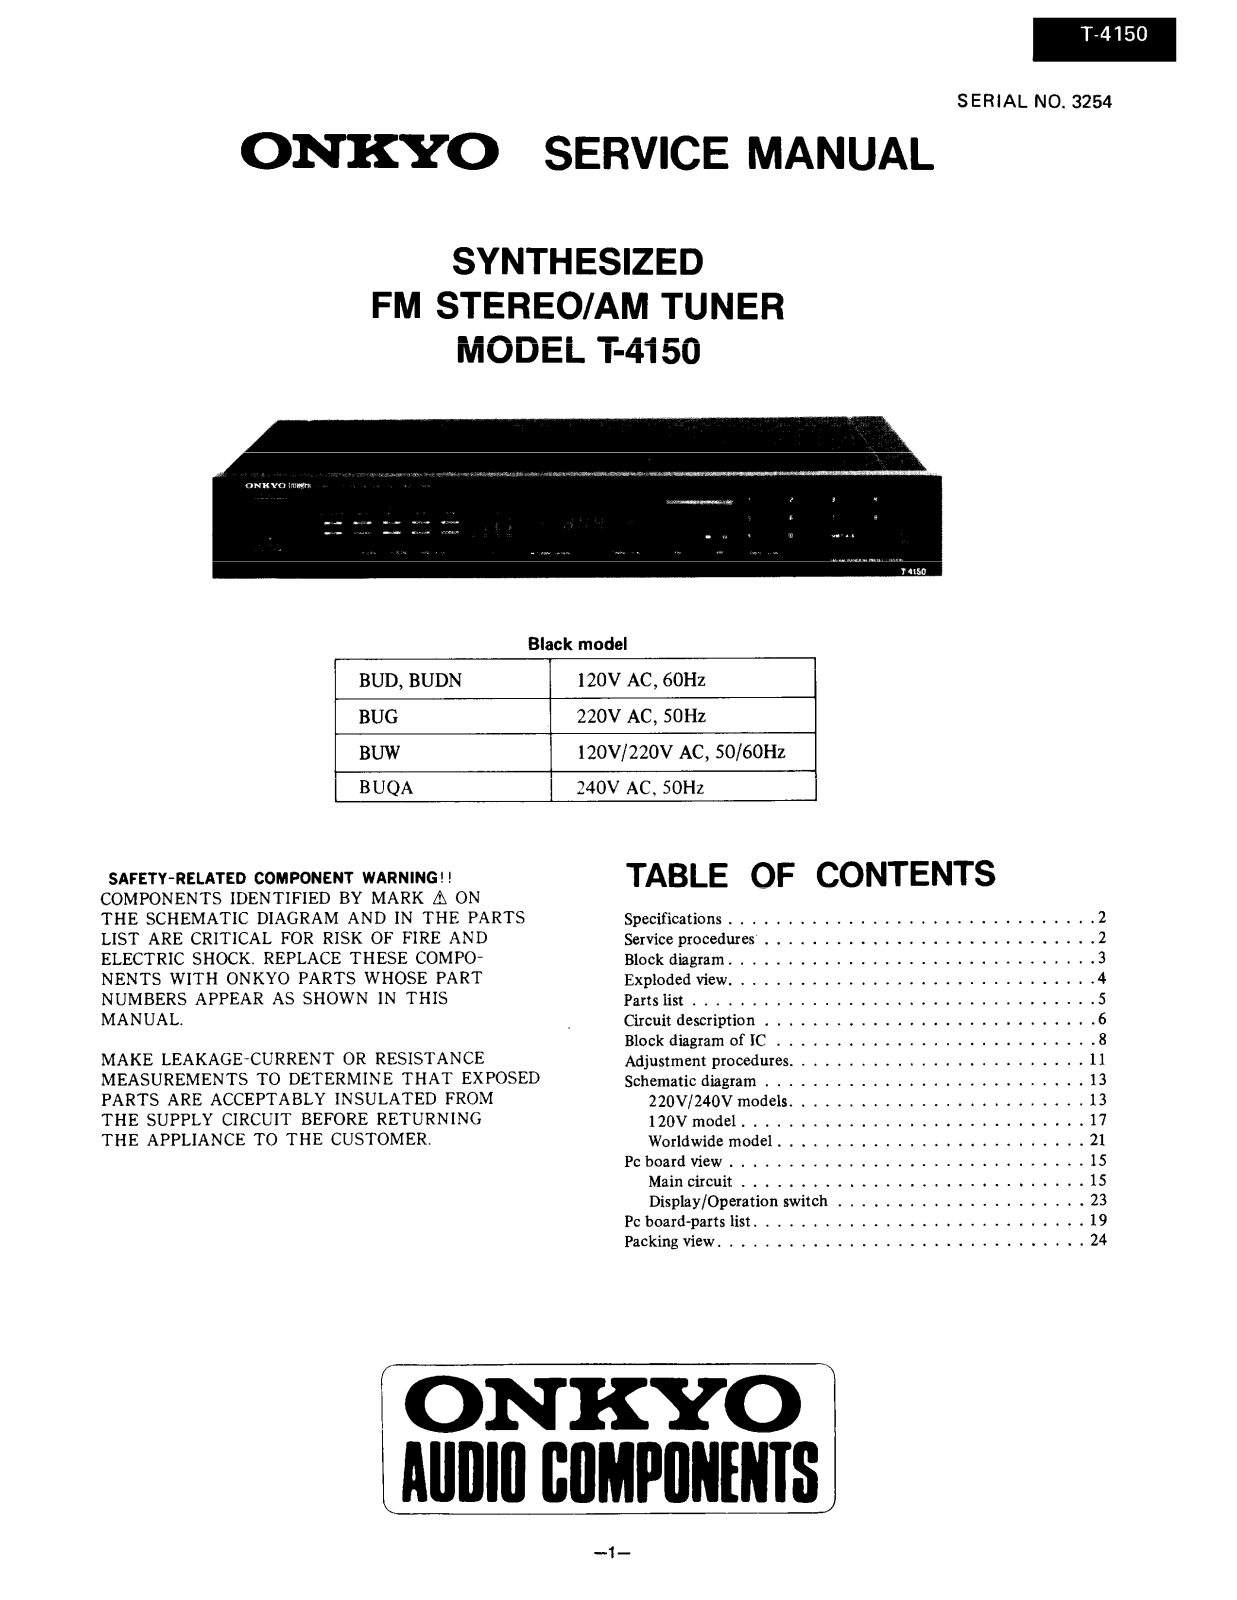 Onkyo T-4150 Service manual